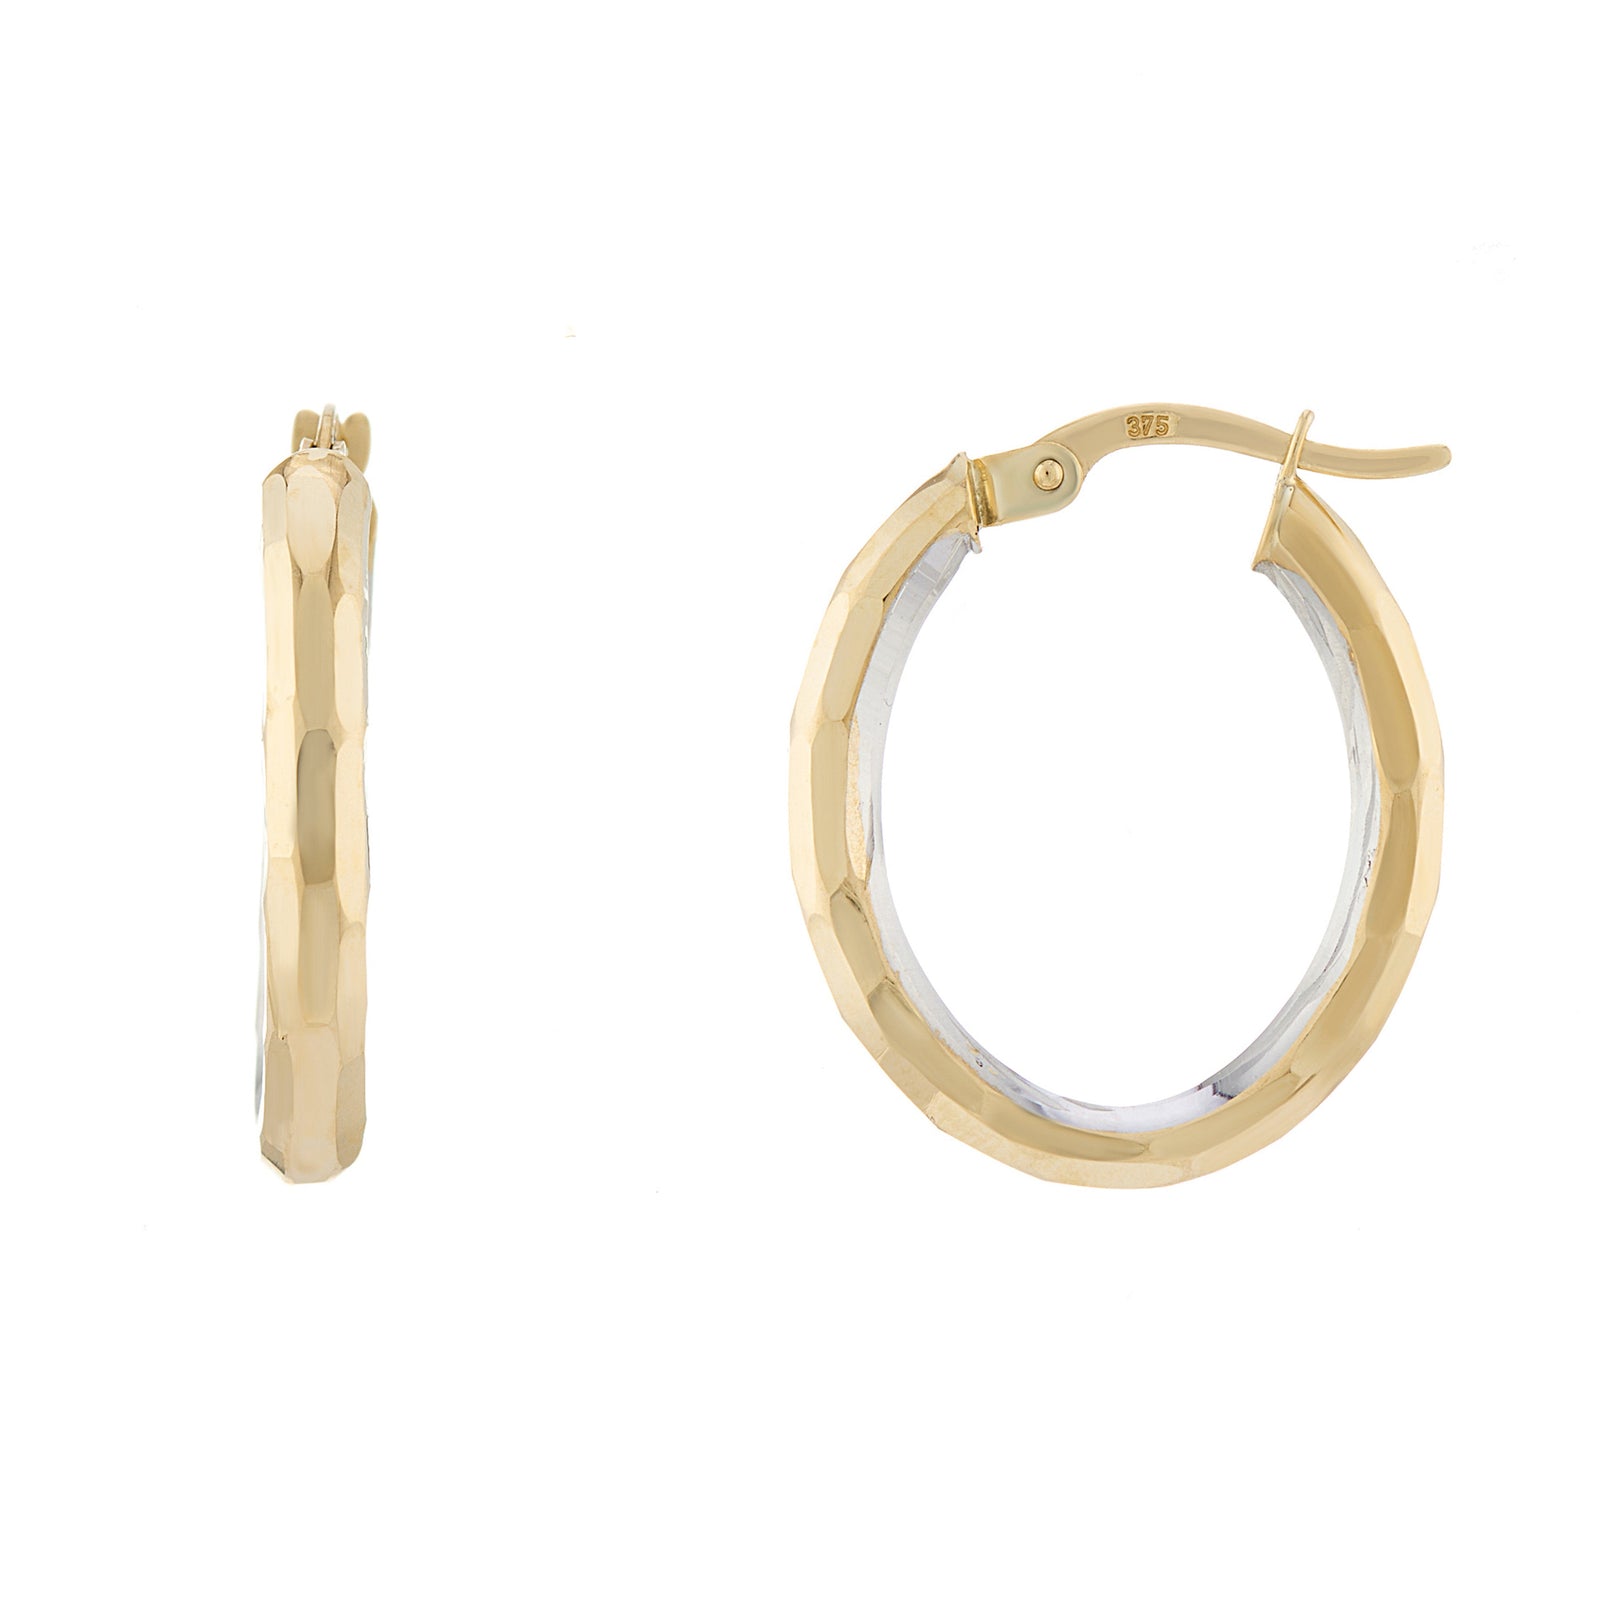 9ct gold 14mm x 18mm diamond cut hoop earrings with inside rhodiumed